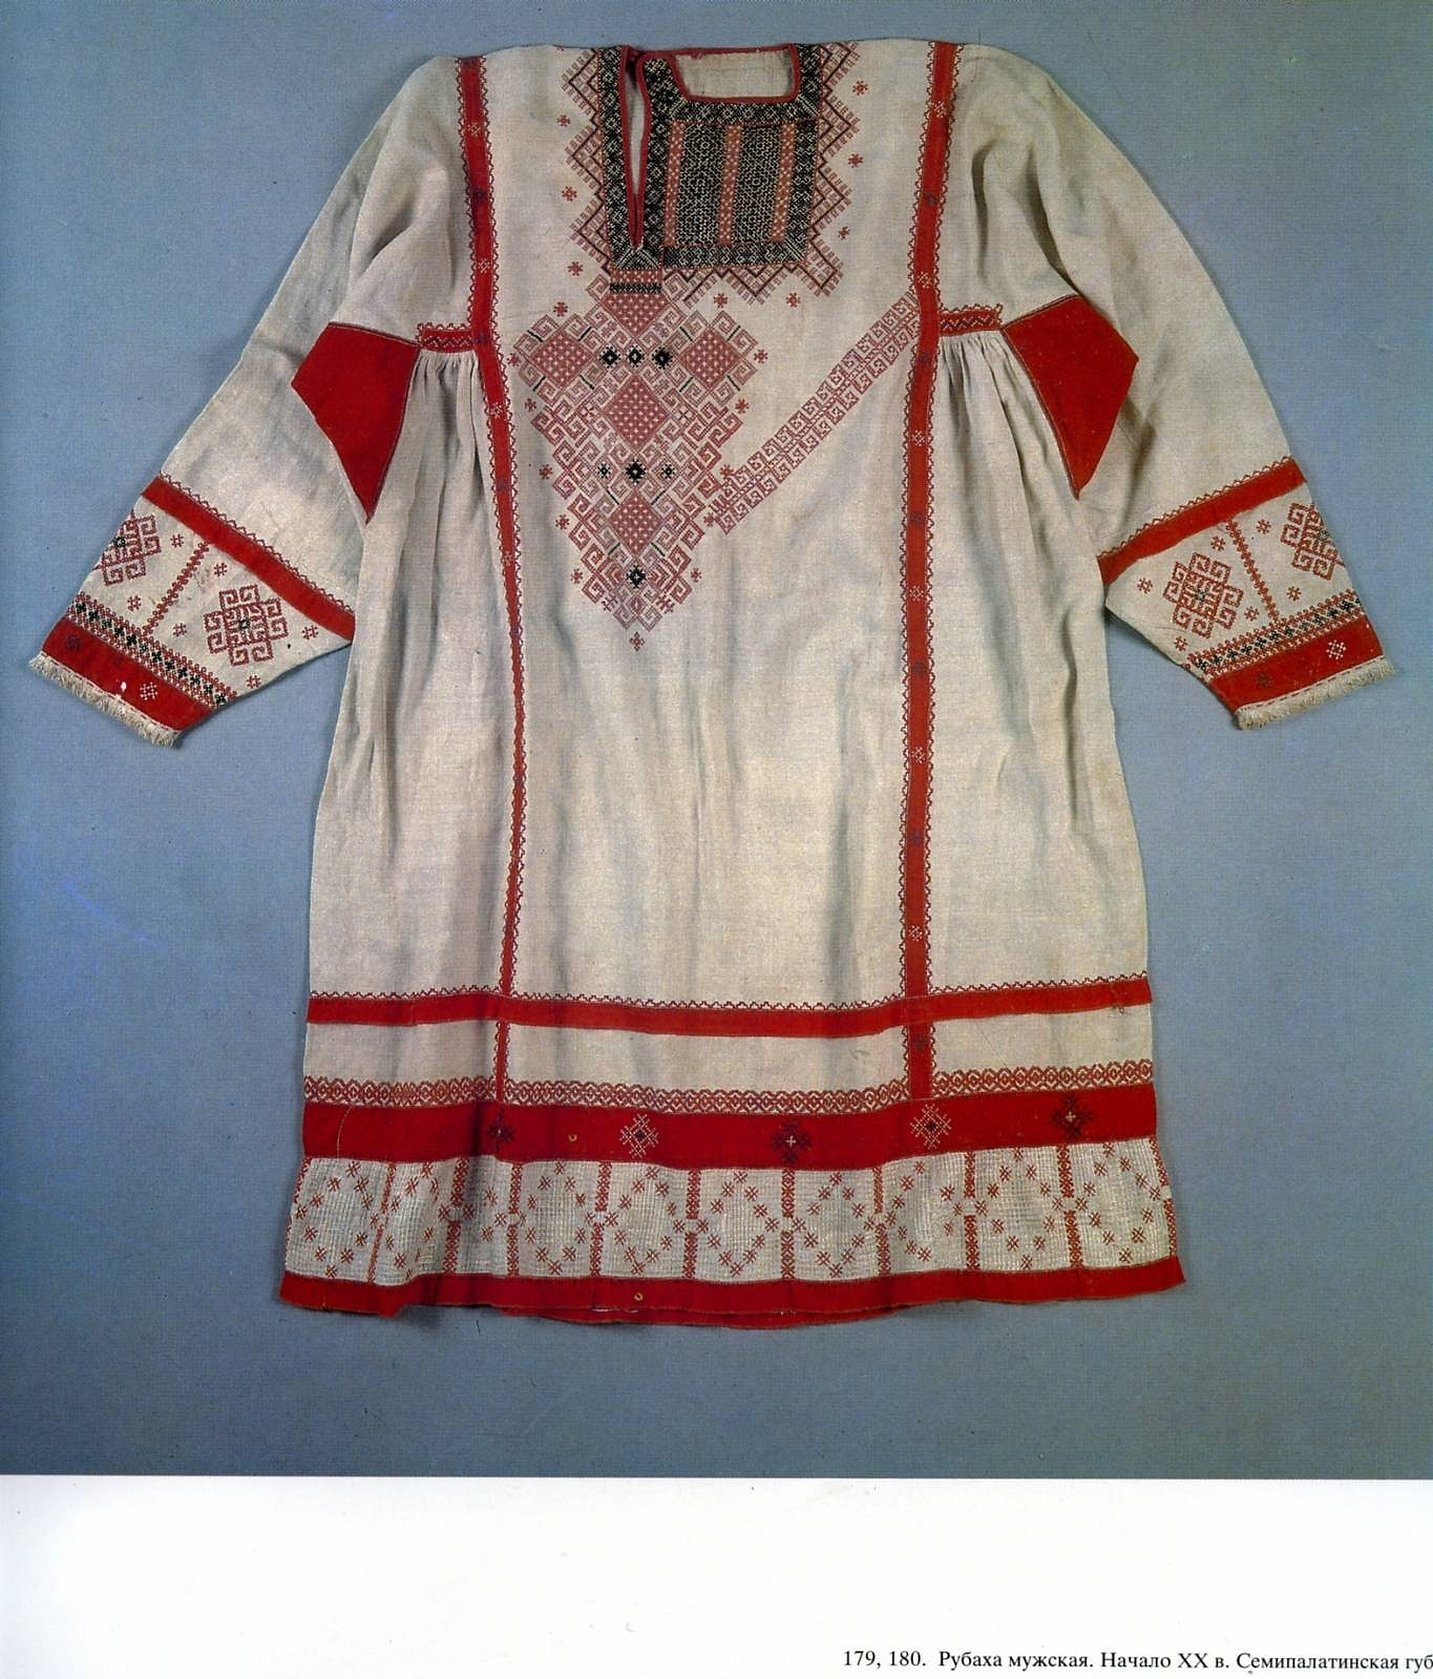 Русская народная рубаха изо